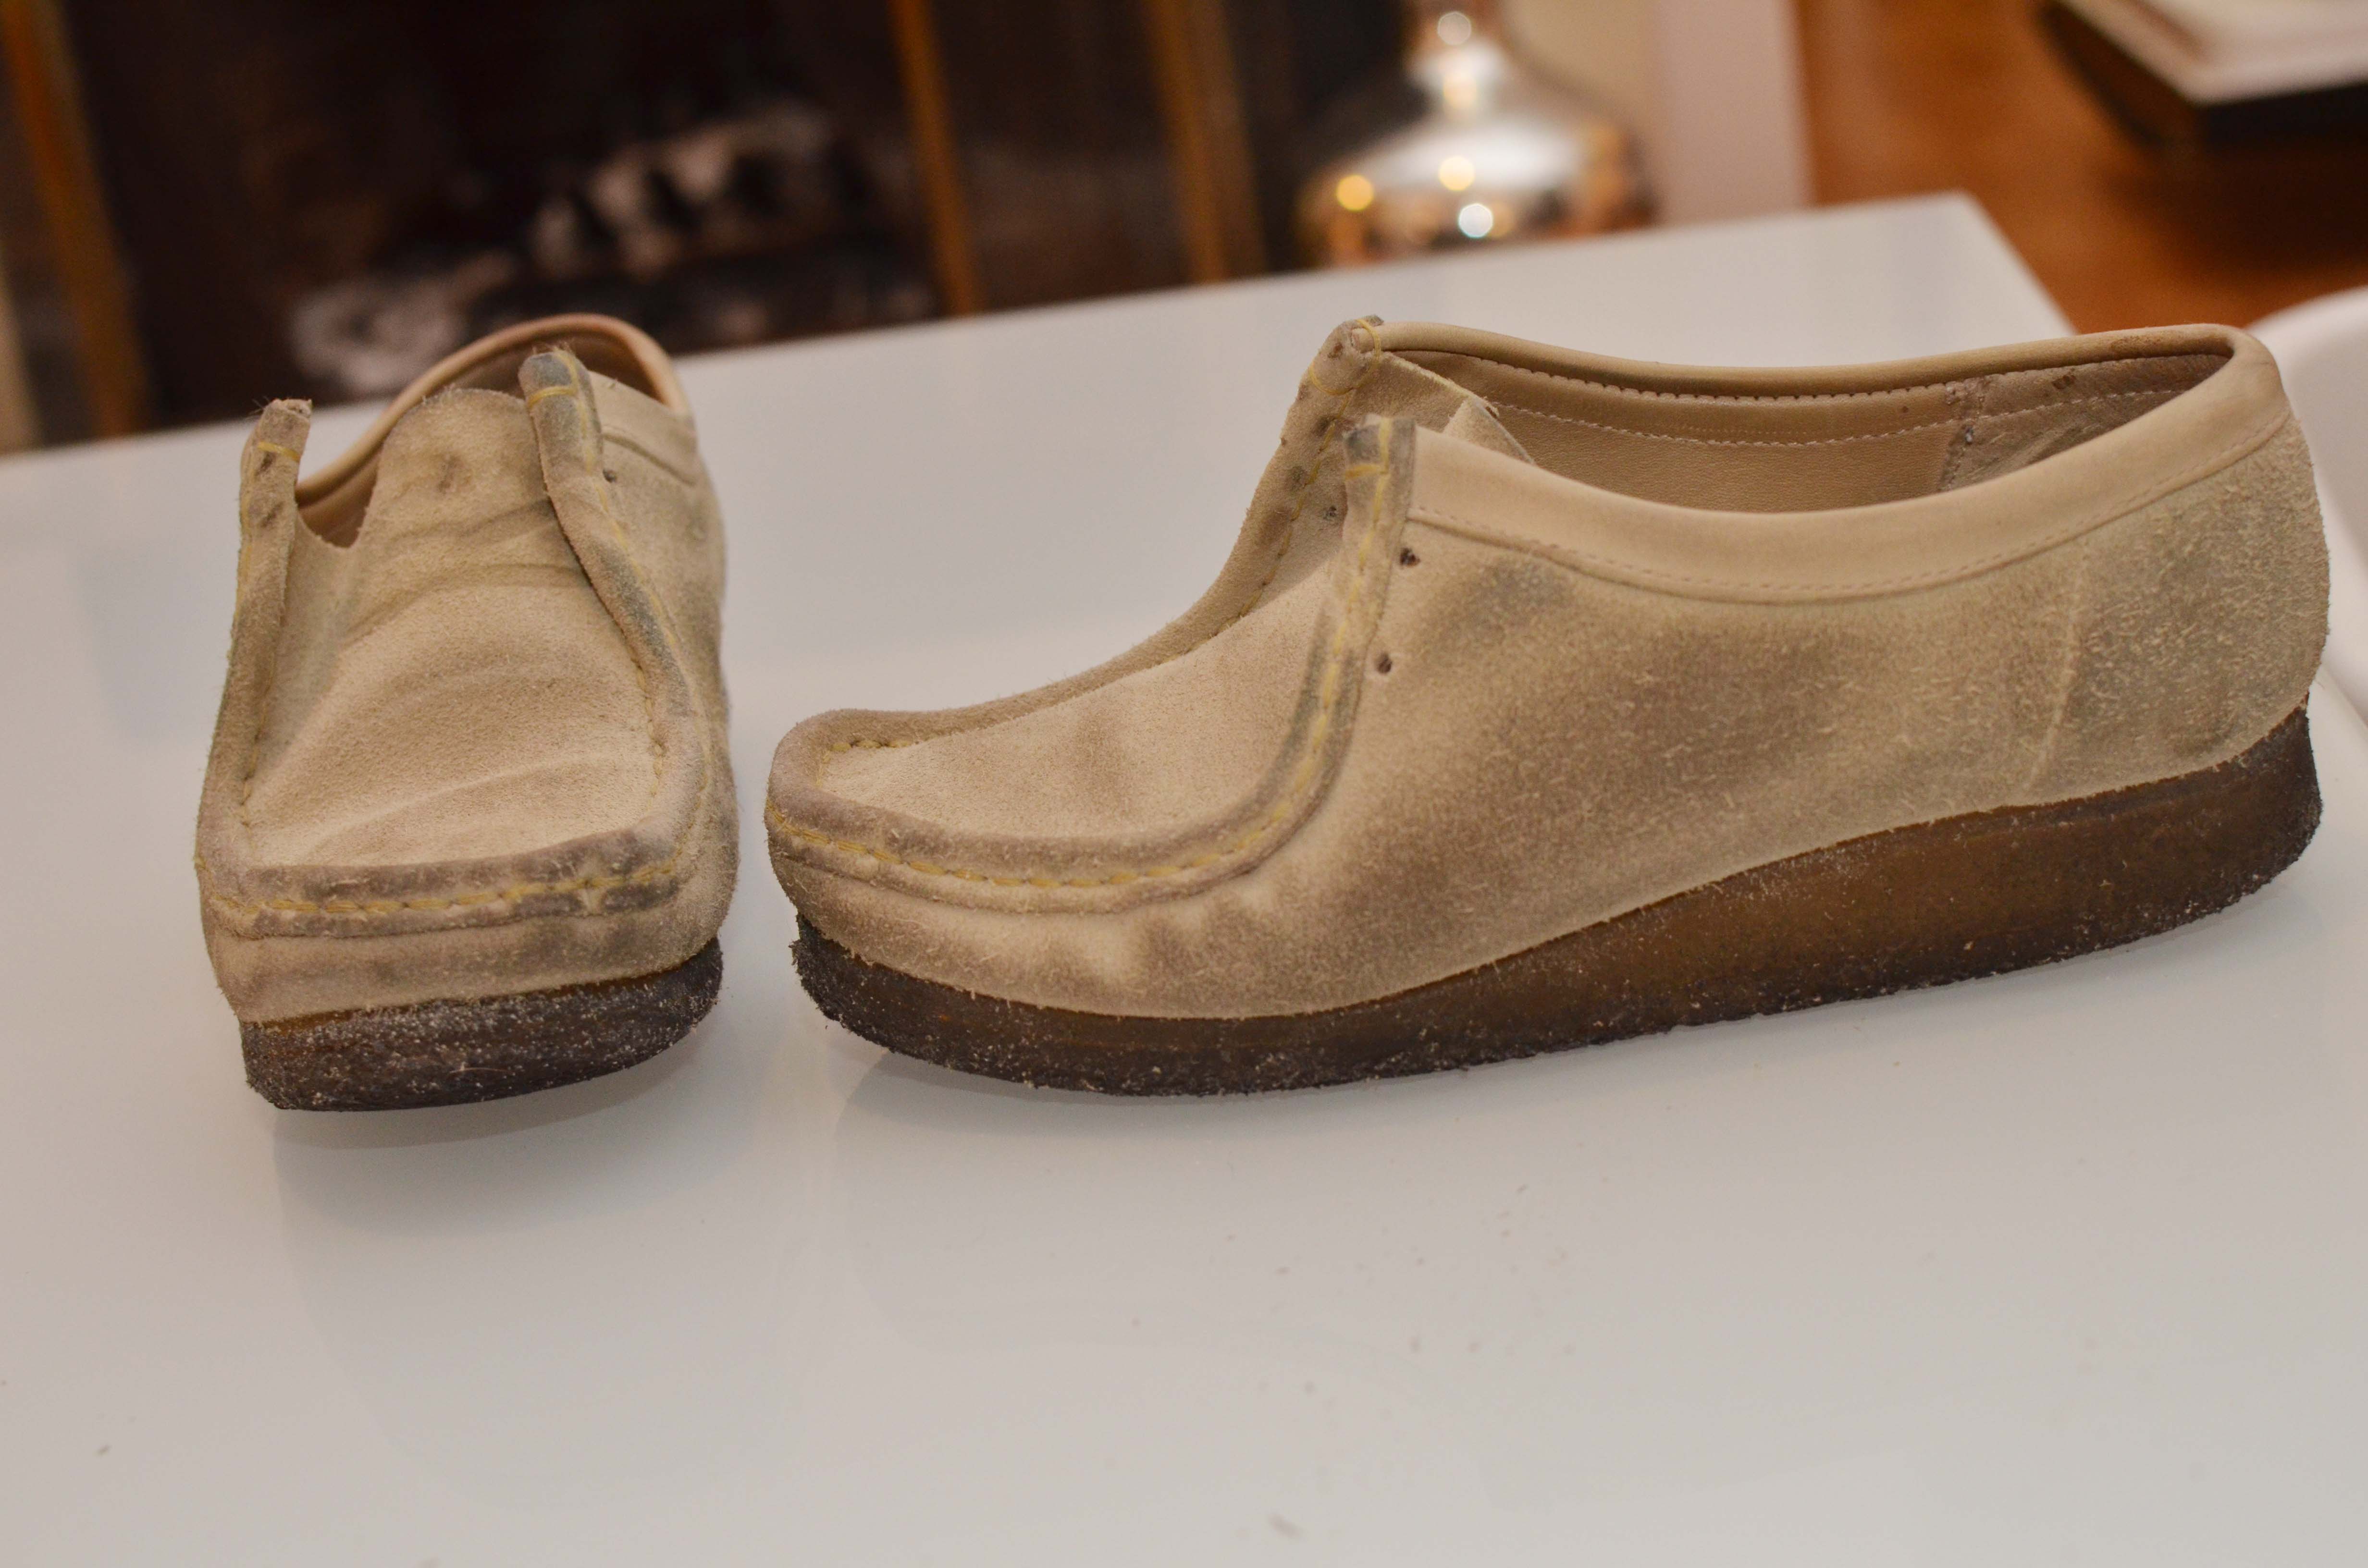 can you use shoe polish on nubuck leather